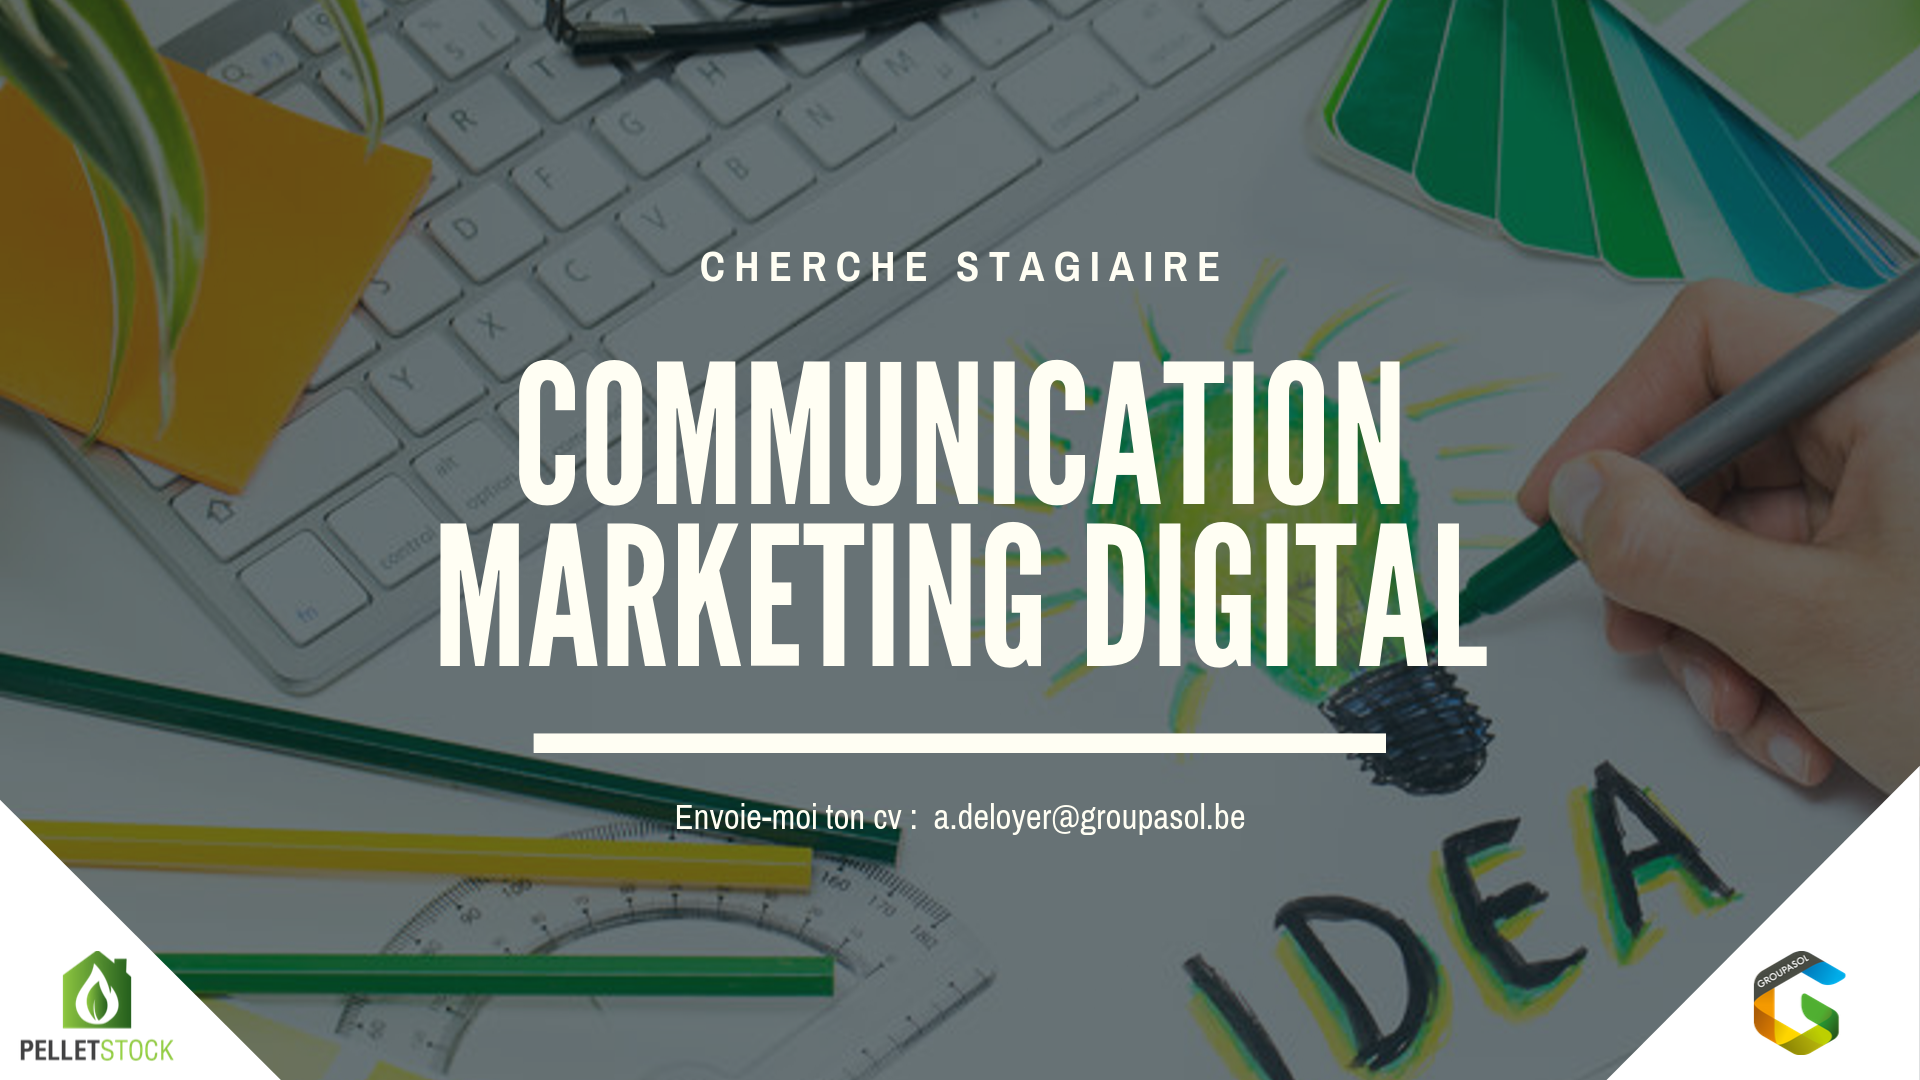 Cherche stagiaire communication marketing digital 